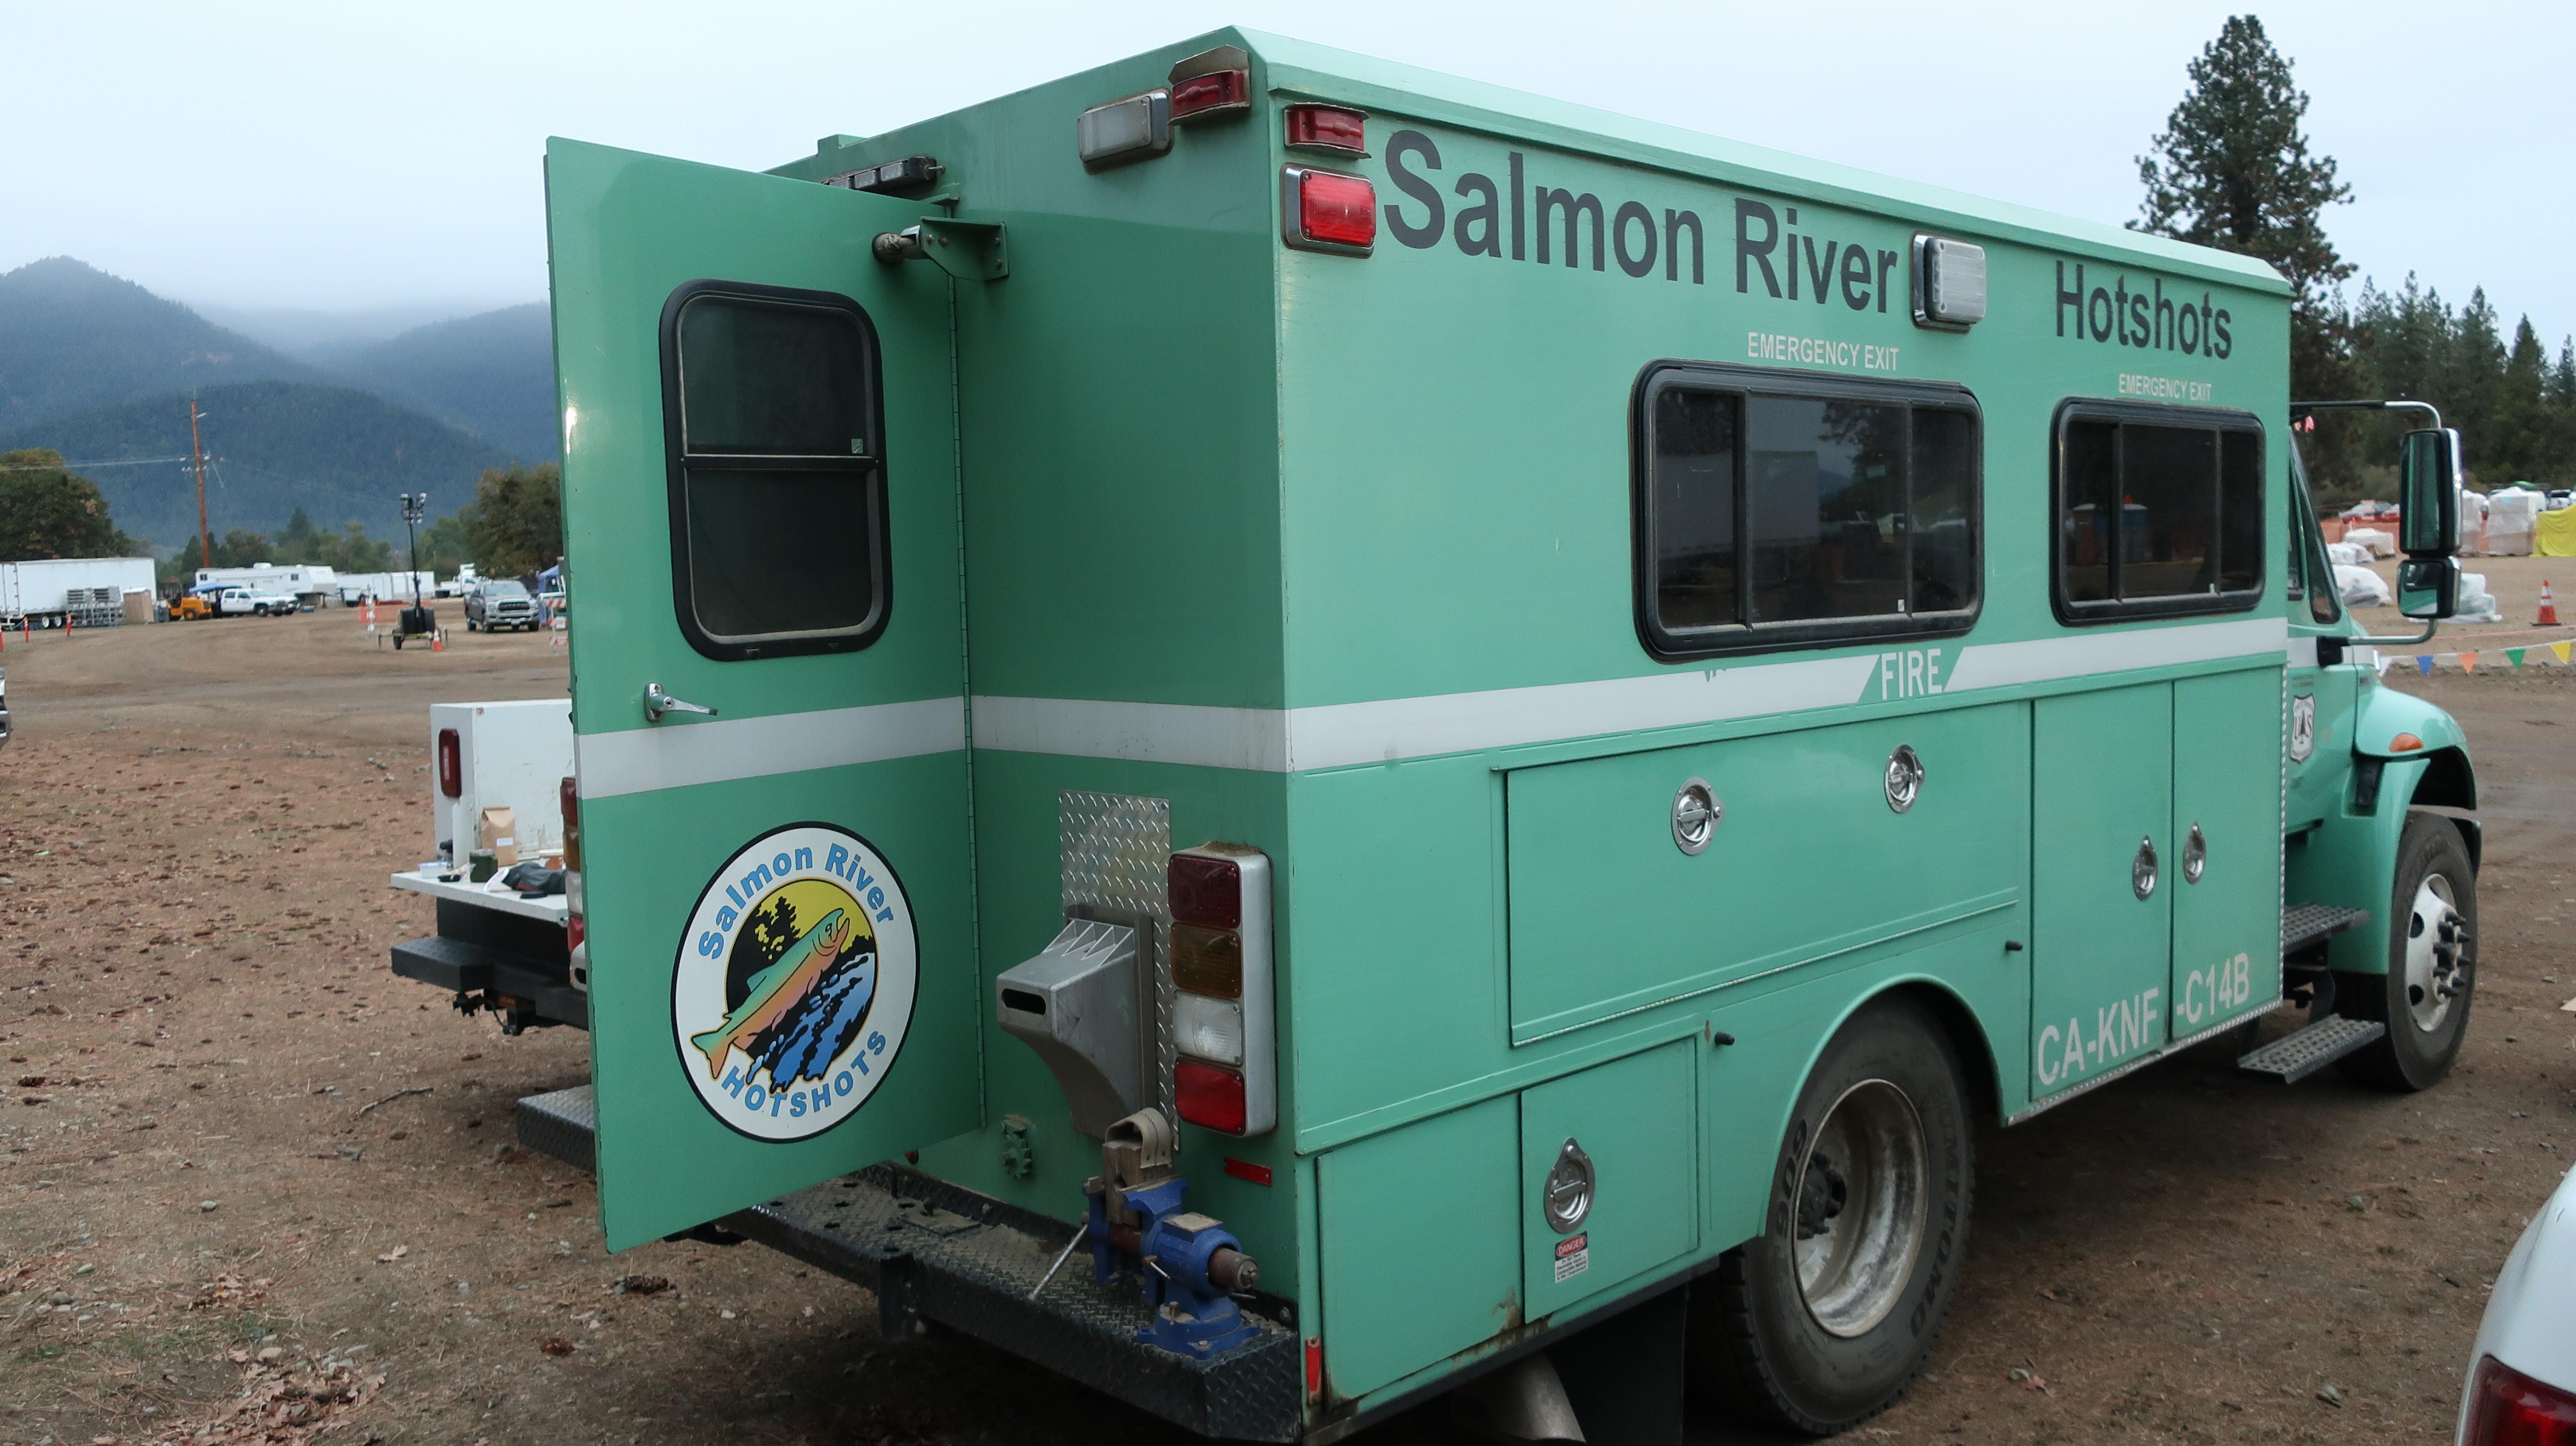 Salmon River IHC